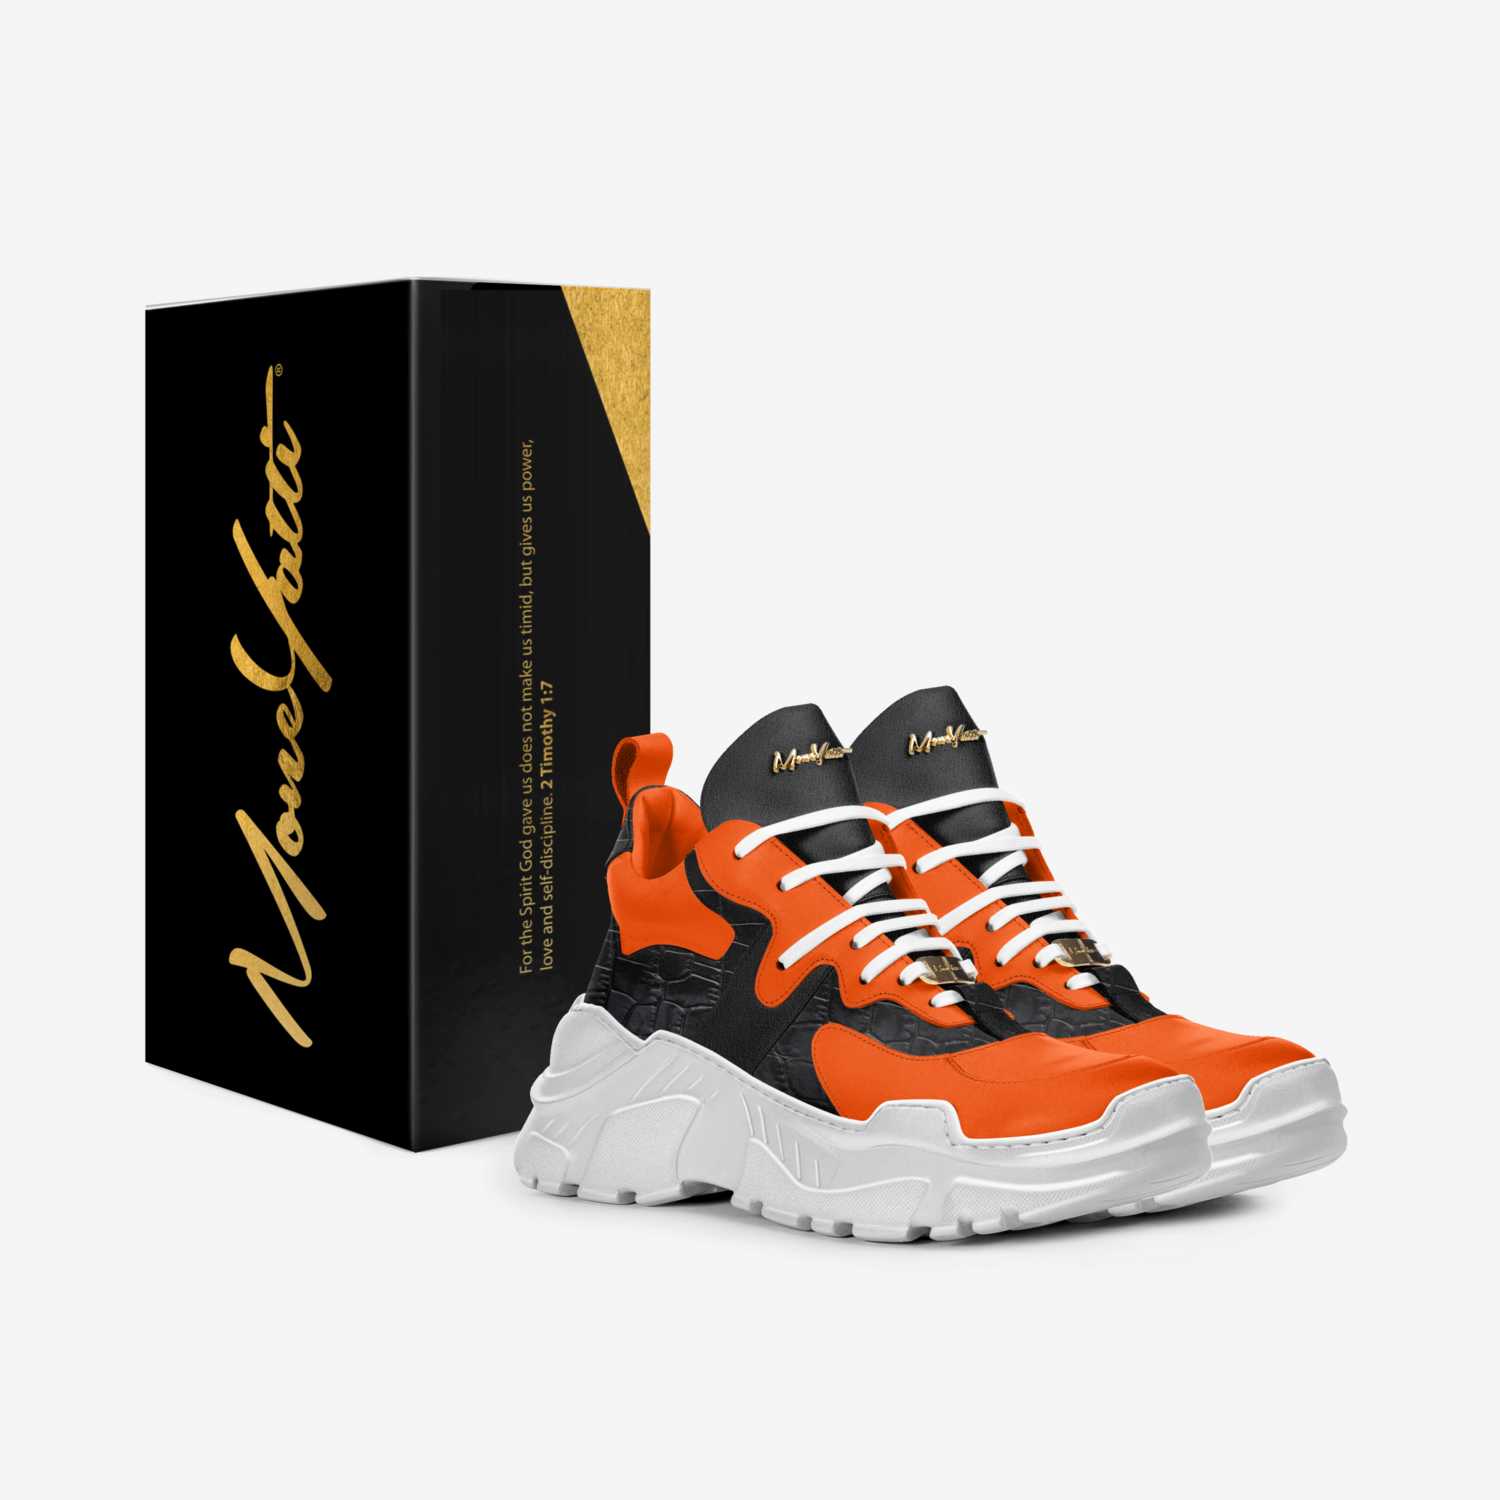 Murks 2.0 H14 custom made in Italy shoes by Moneyatti Brand | Box view